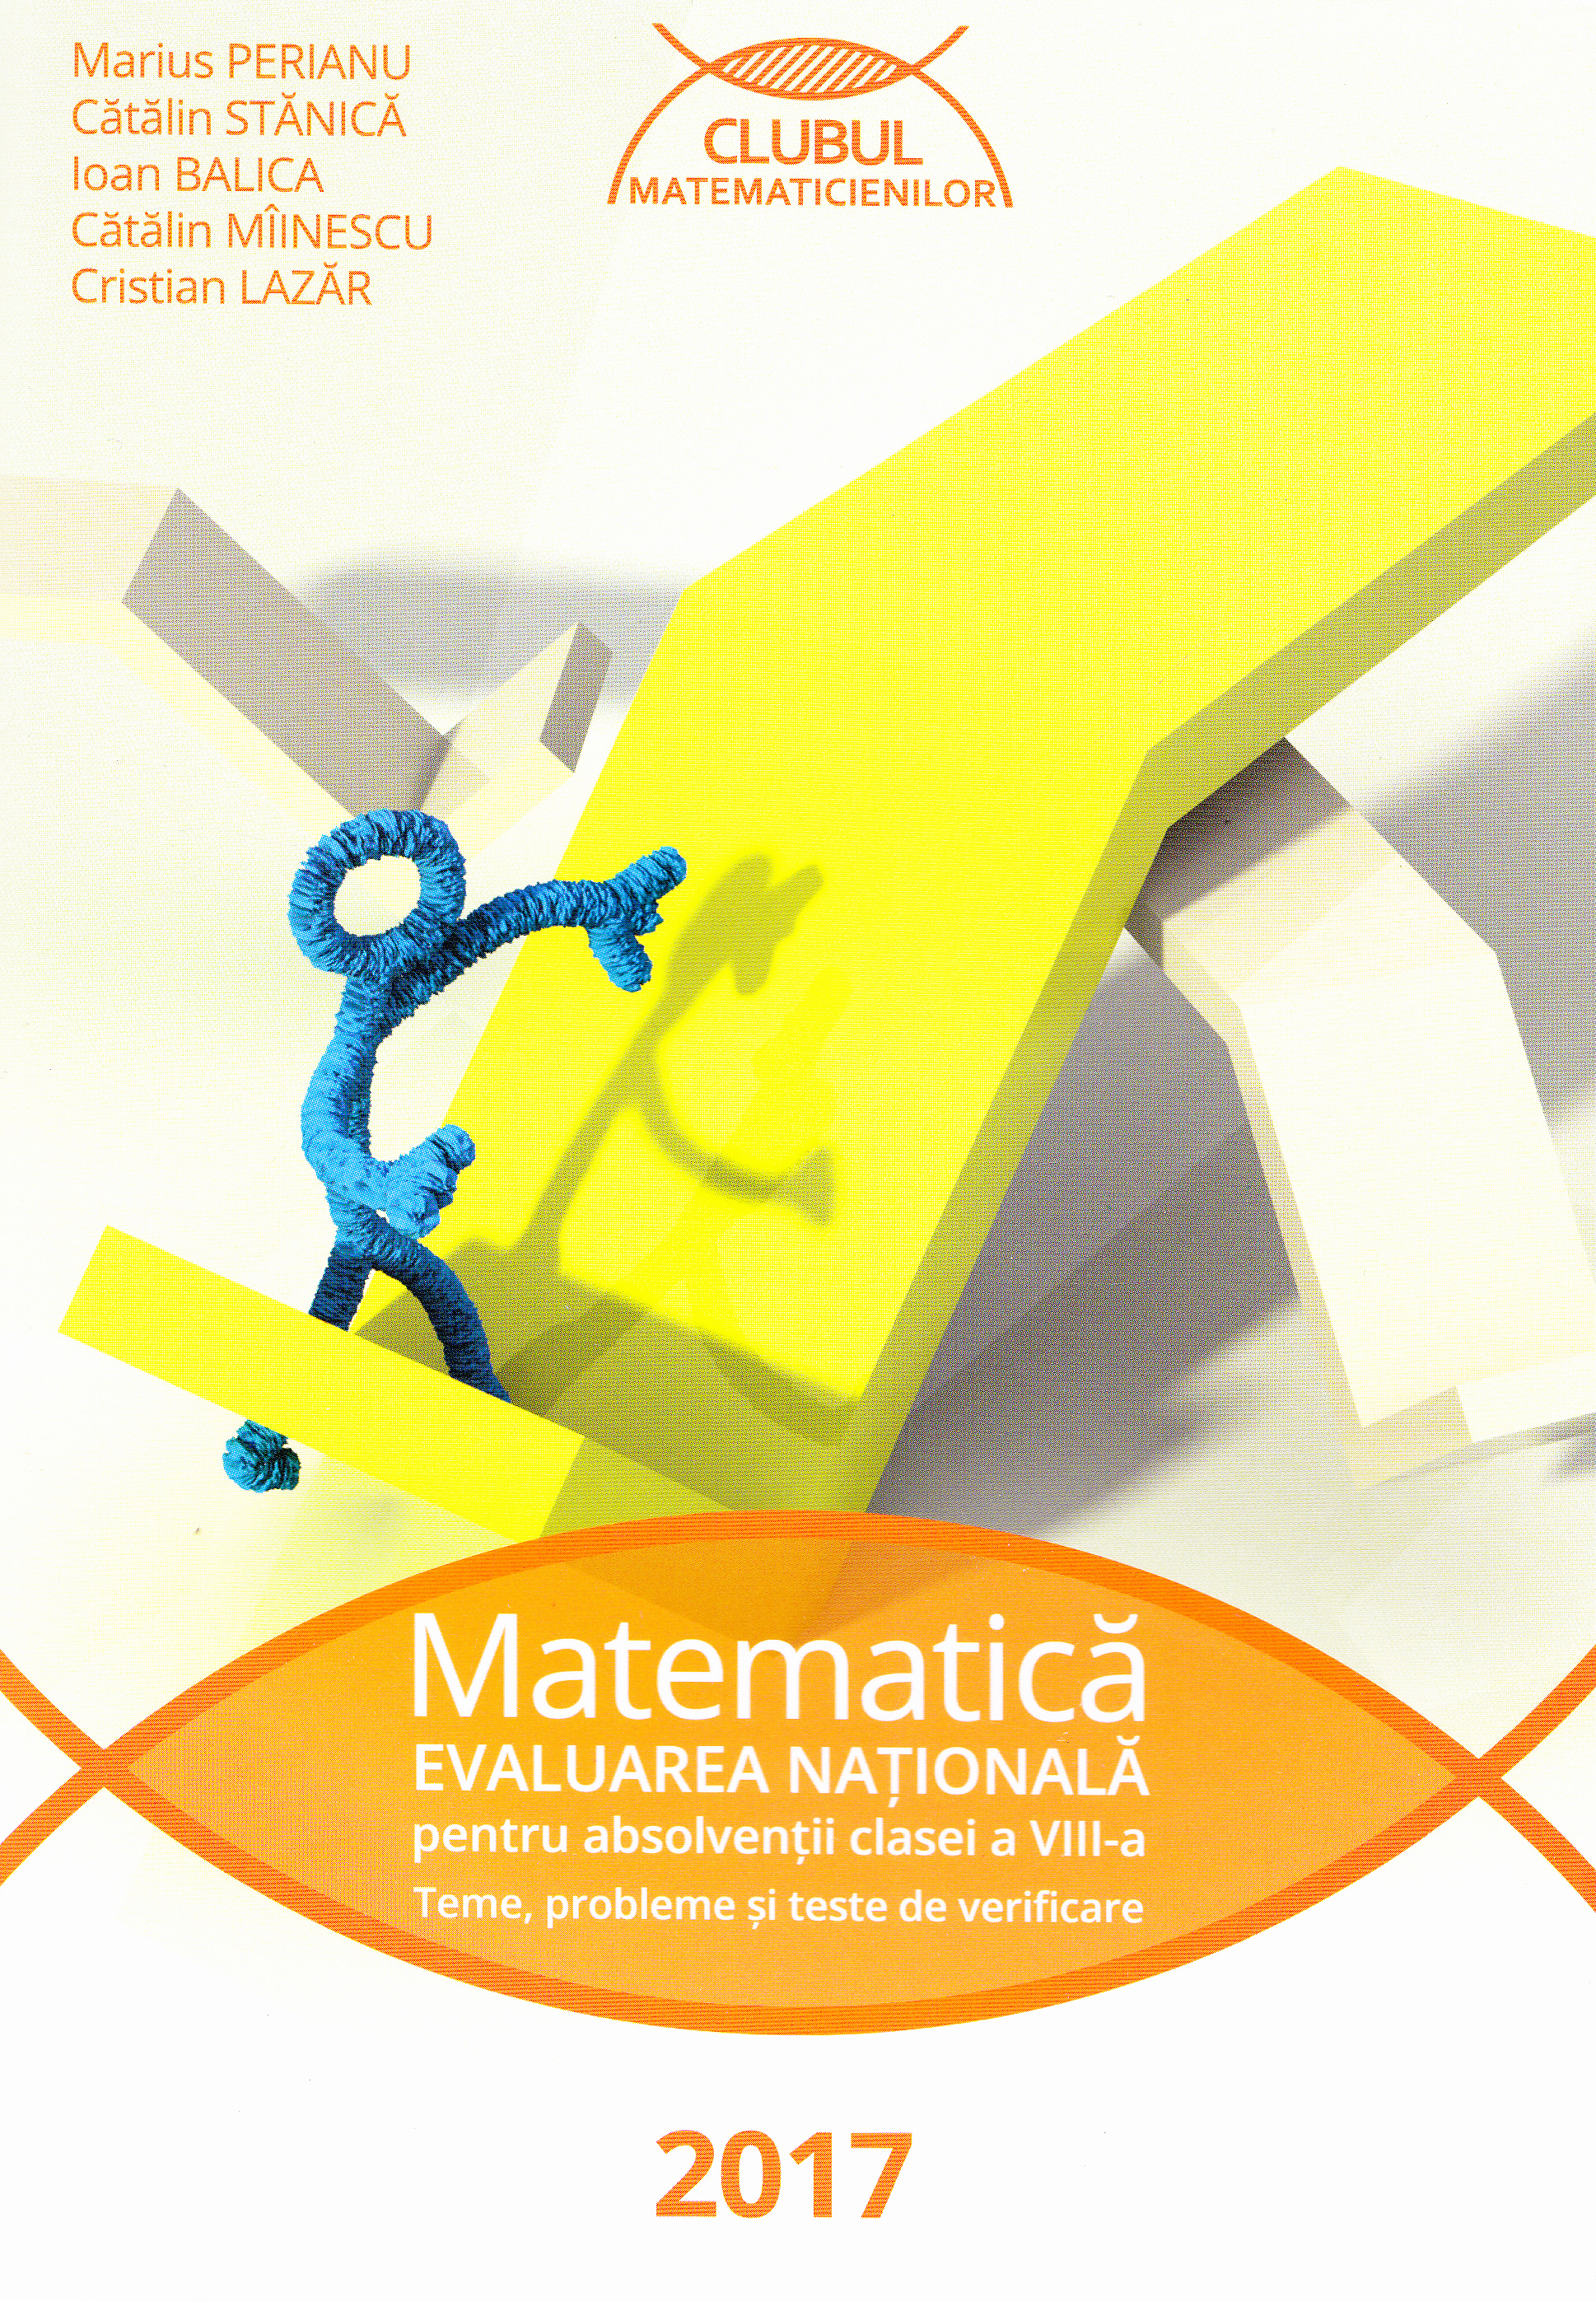 Evaluare nationala 2017 Matematica - Marius Perianu, Catalin Stanica